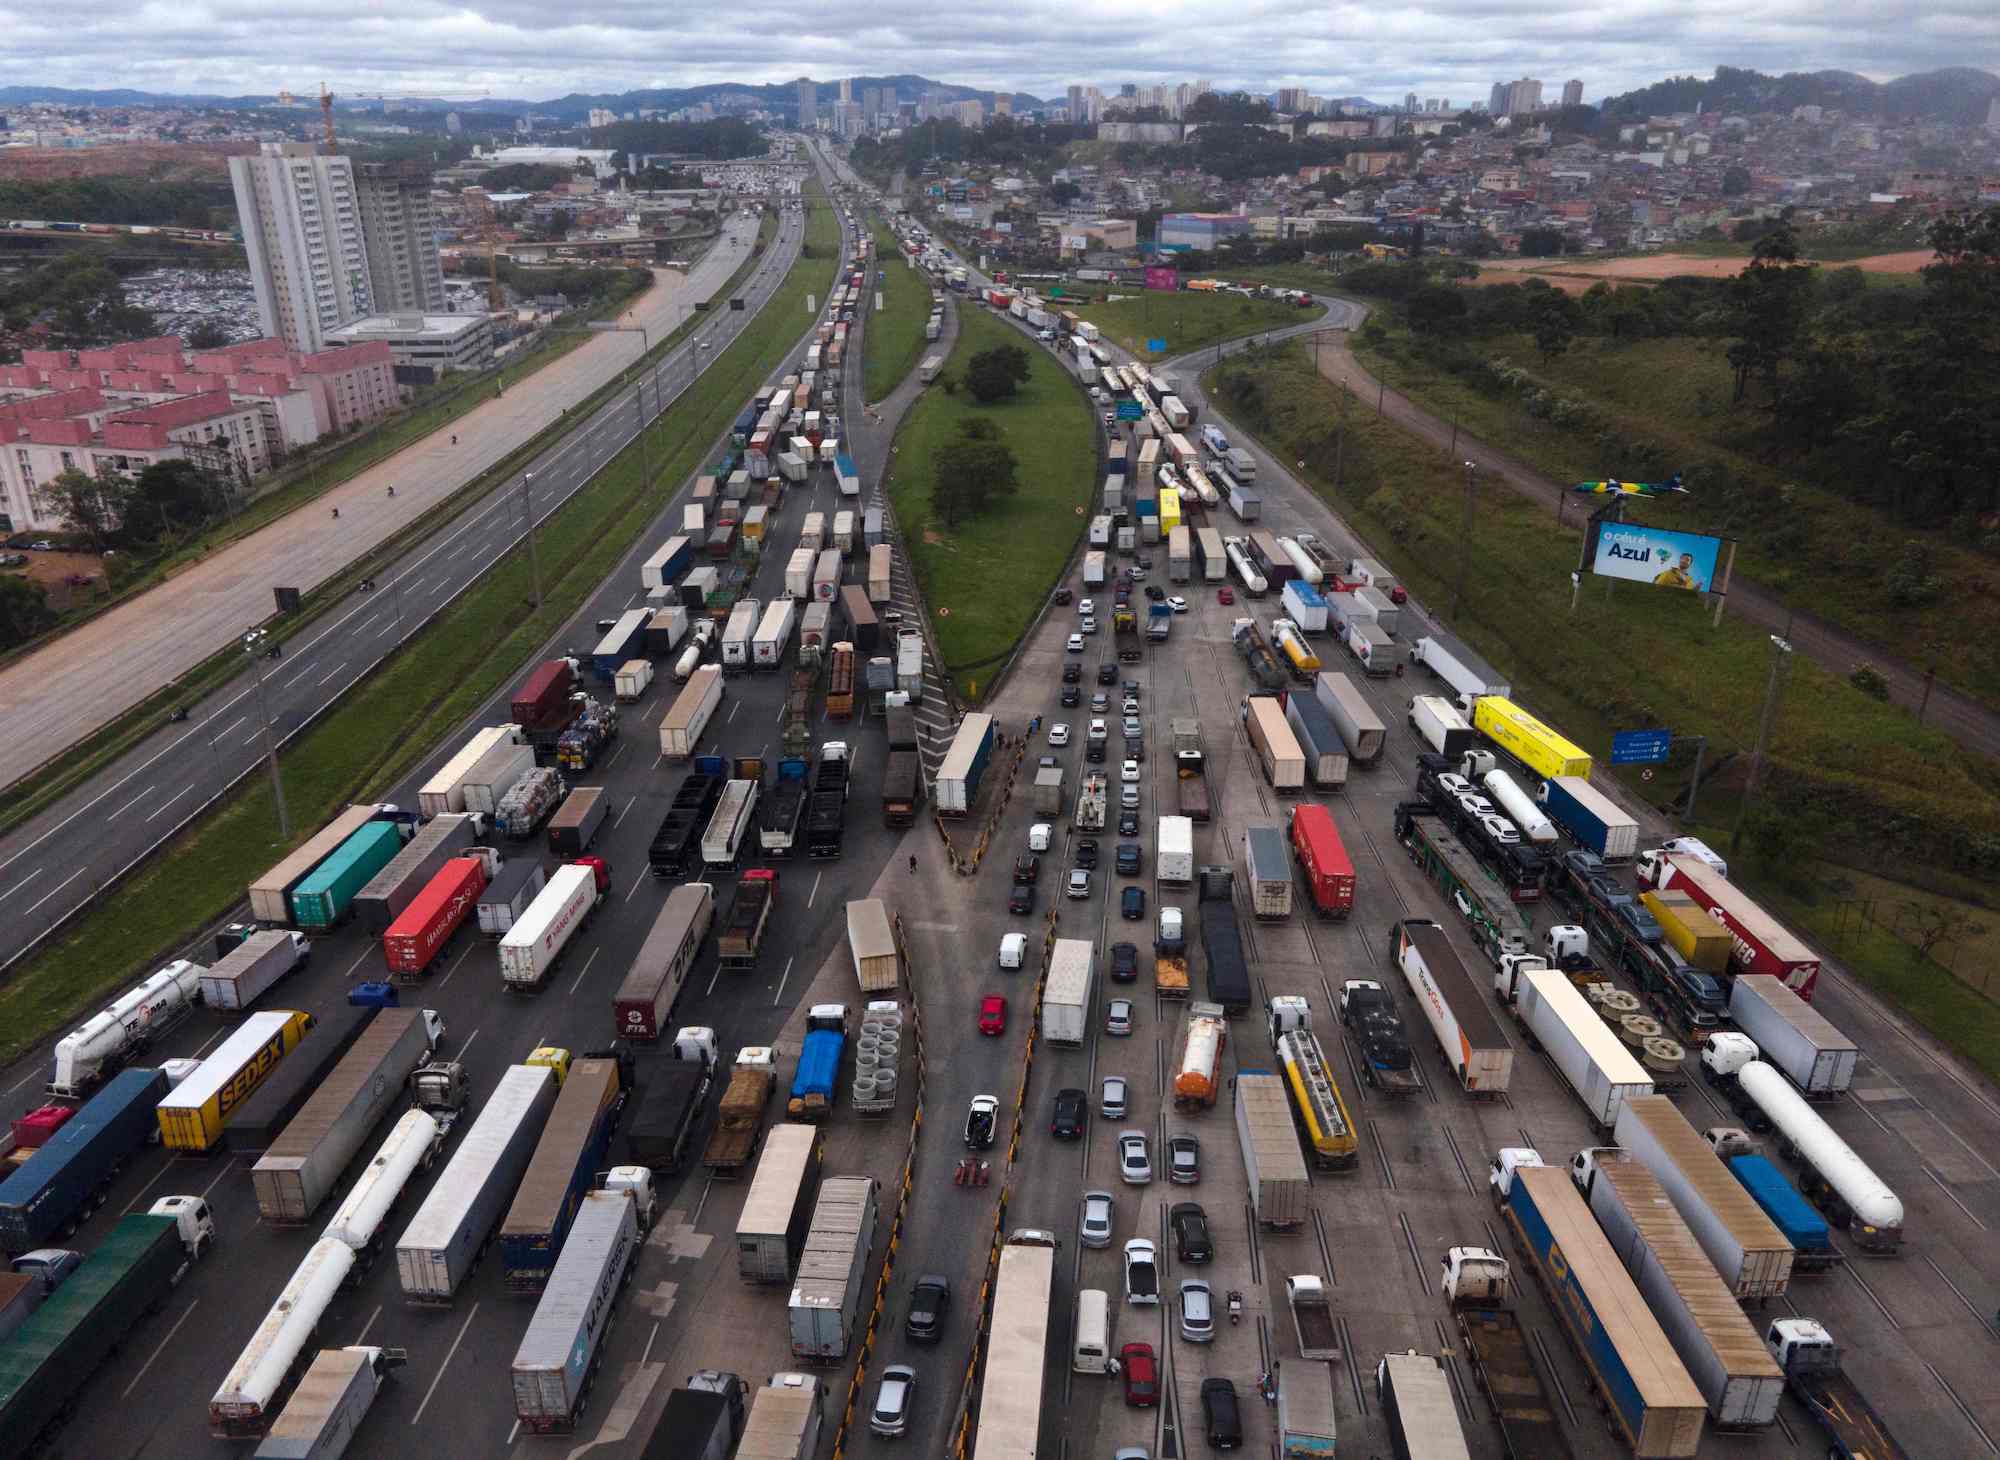 Brazil Growth: 200% Increase in Traffic - nocnoc